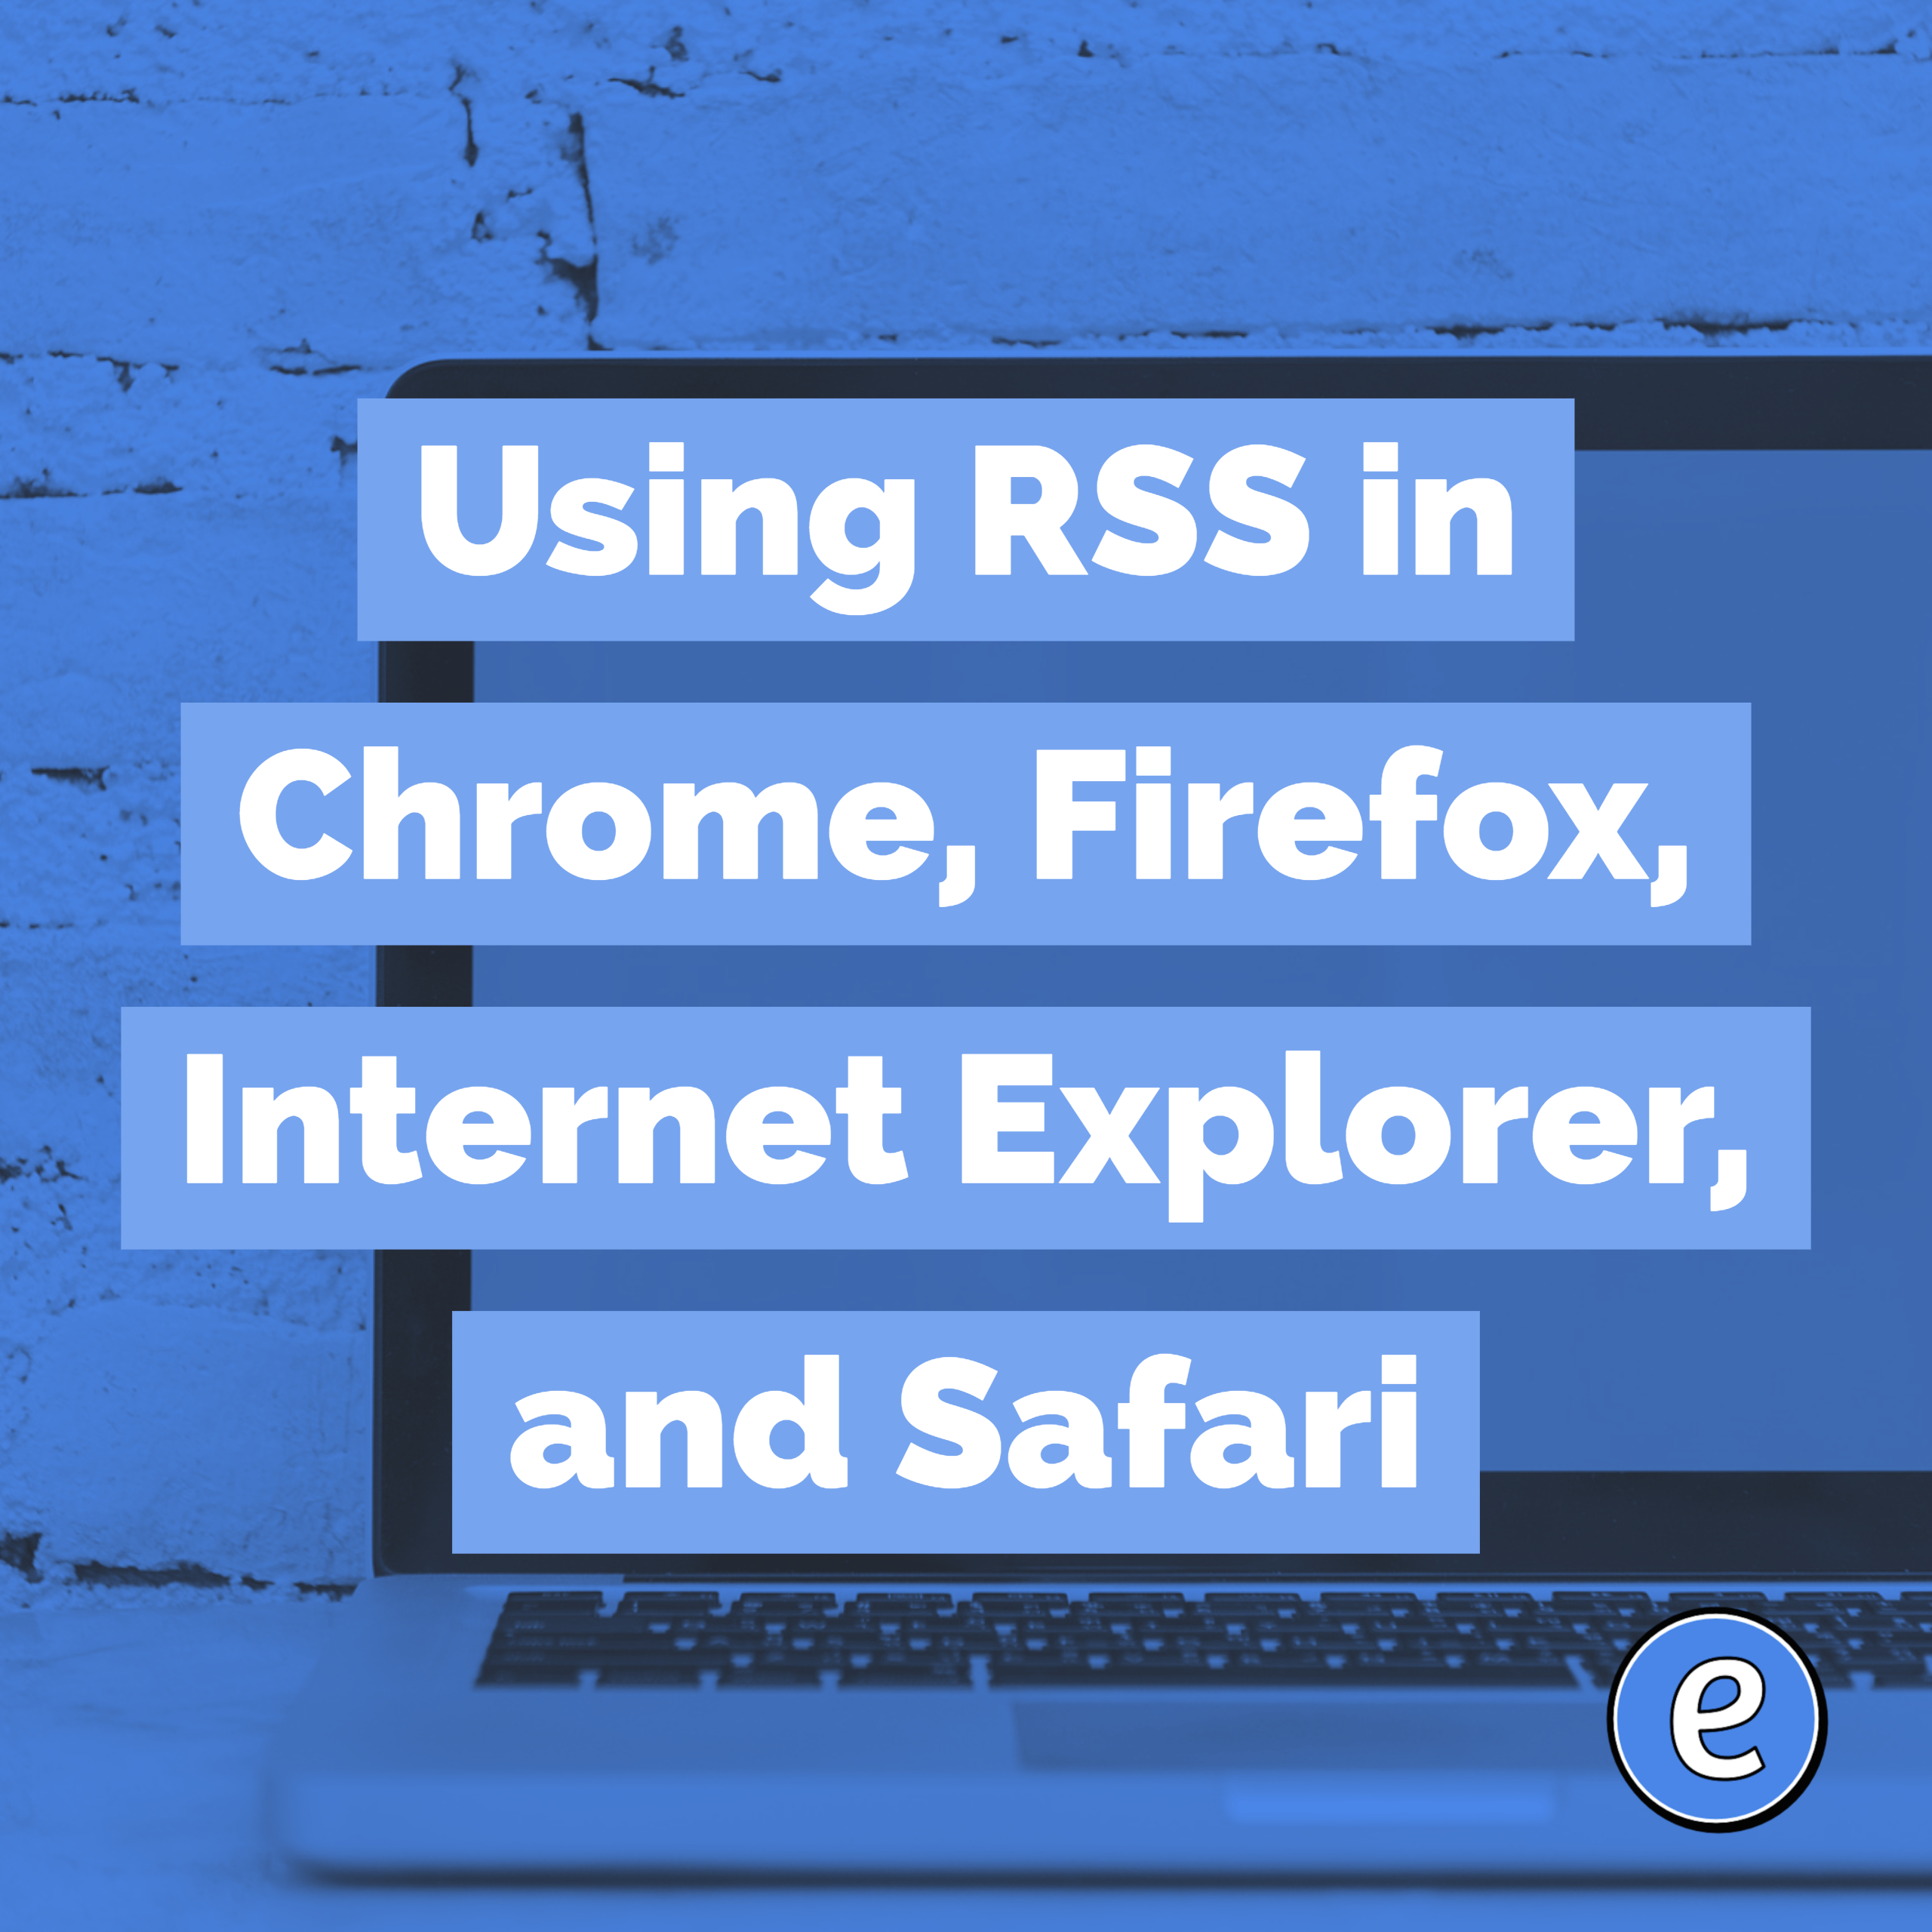 Using RSS in Chrome, Firefox, Internet Explorer, and Safari